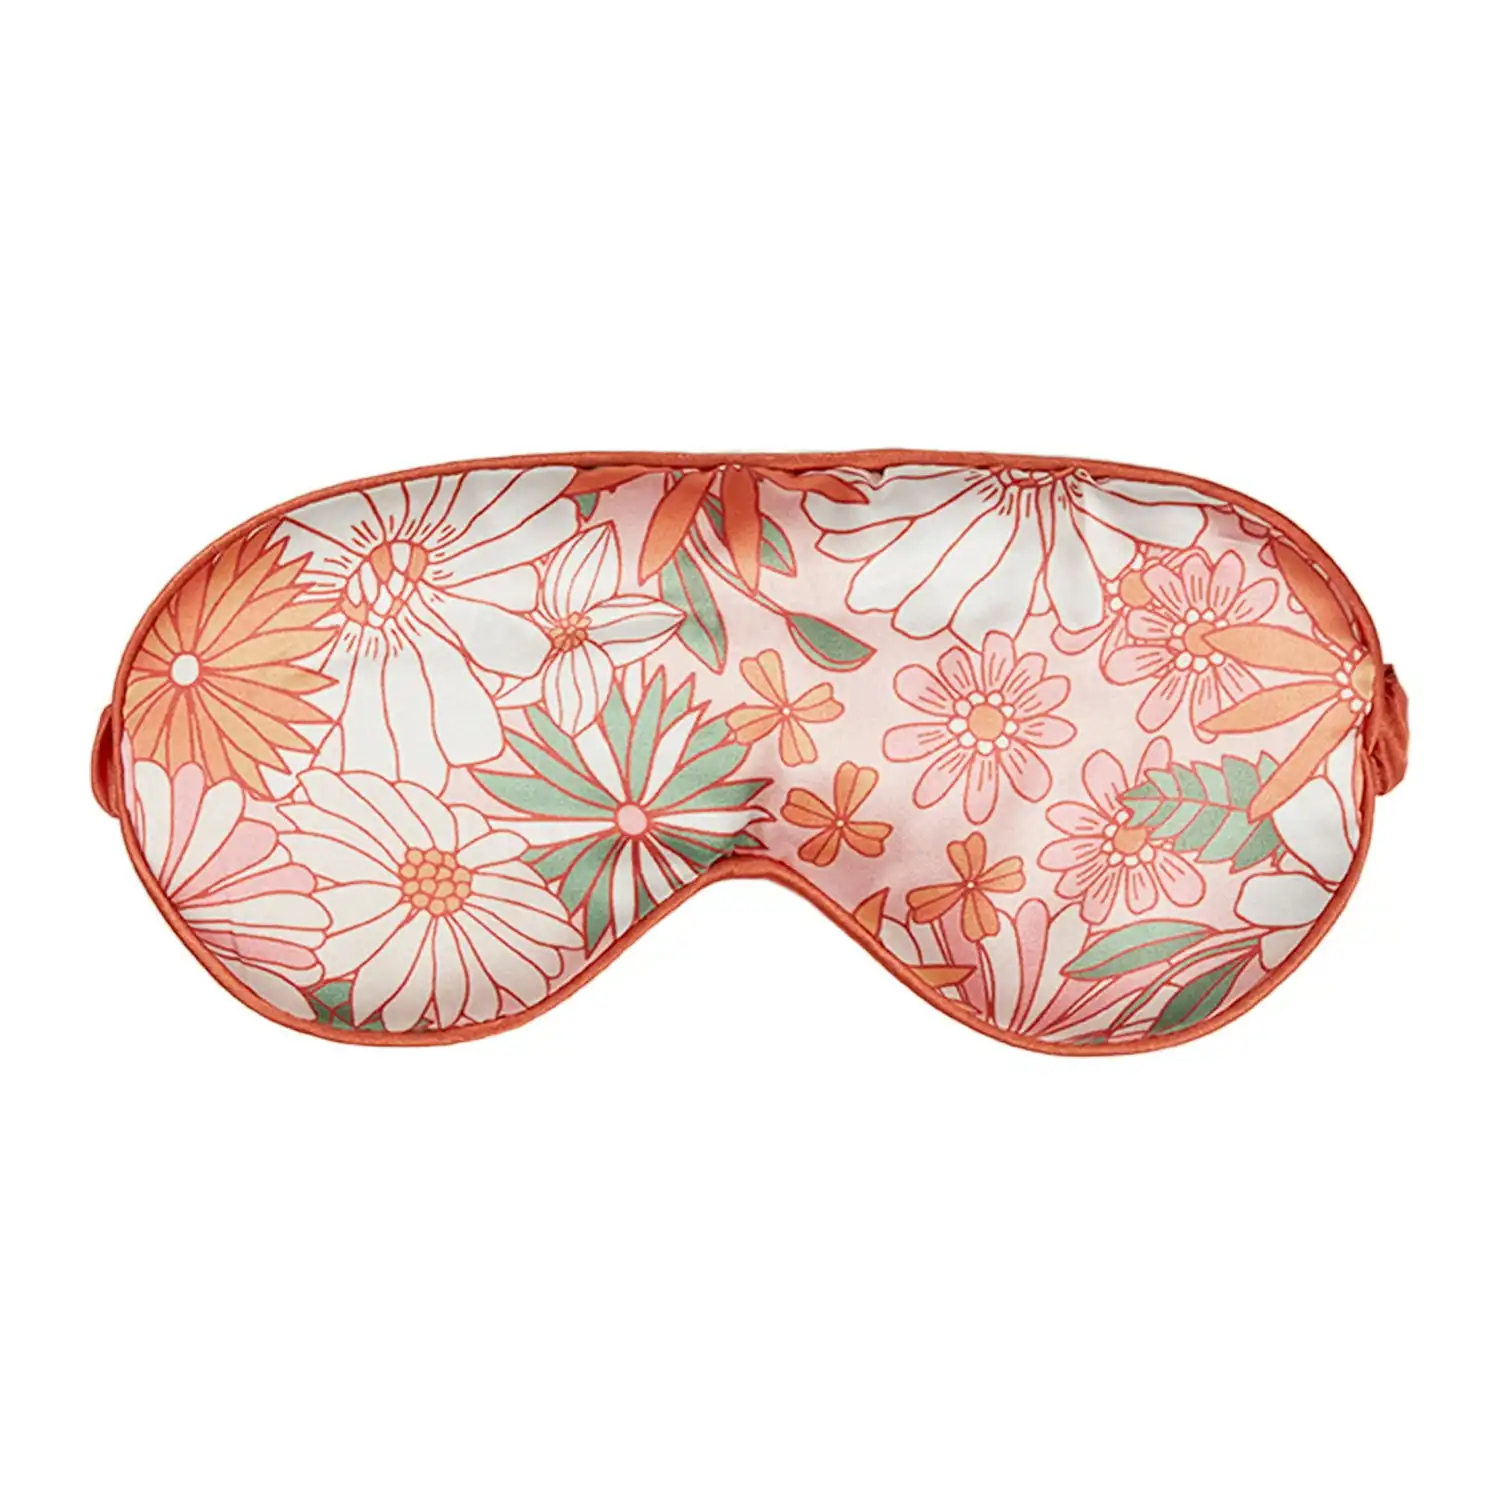 Splosh Wellness Retro Floral Eye Mask/Silk Sleeping Eyeshade Cover 16.5x7.5cm